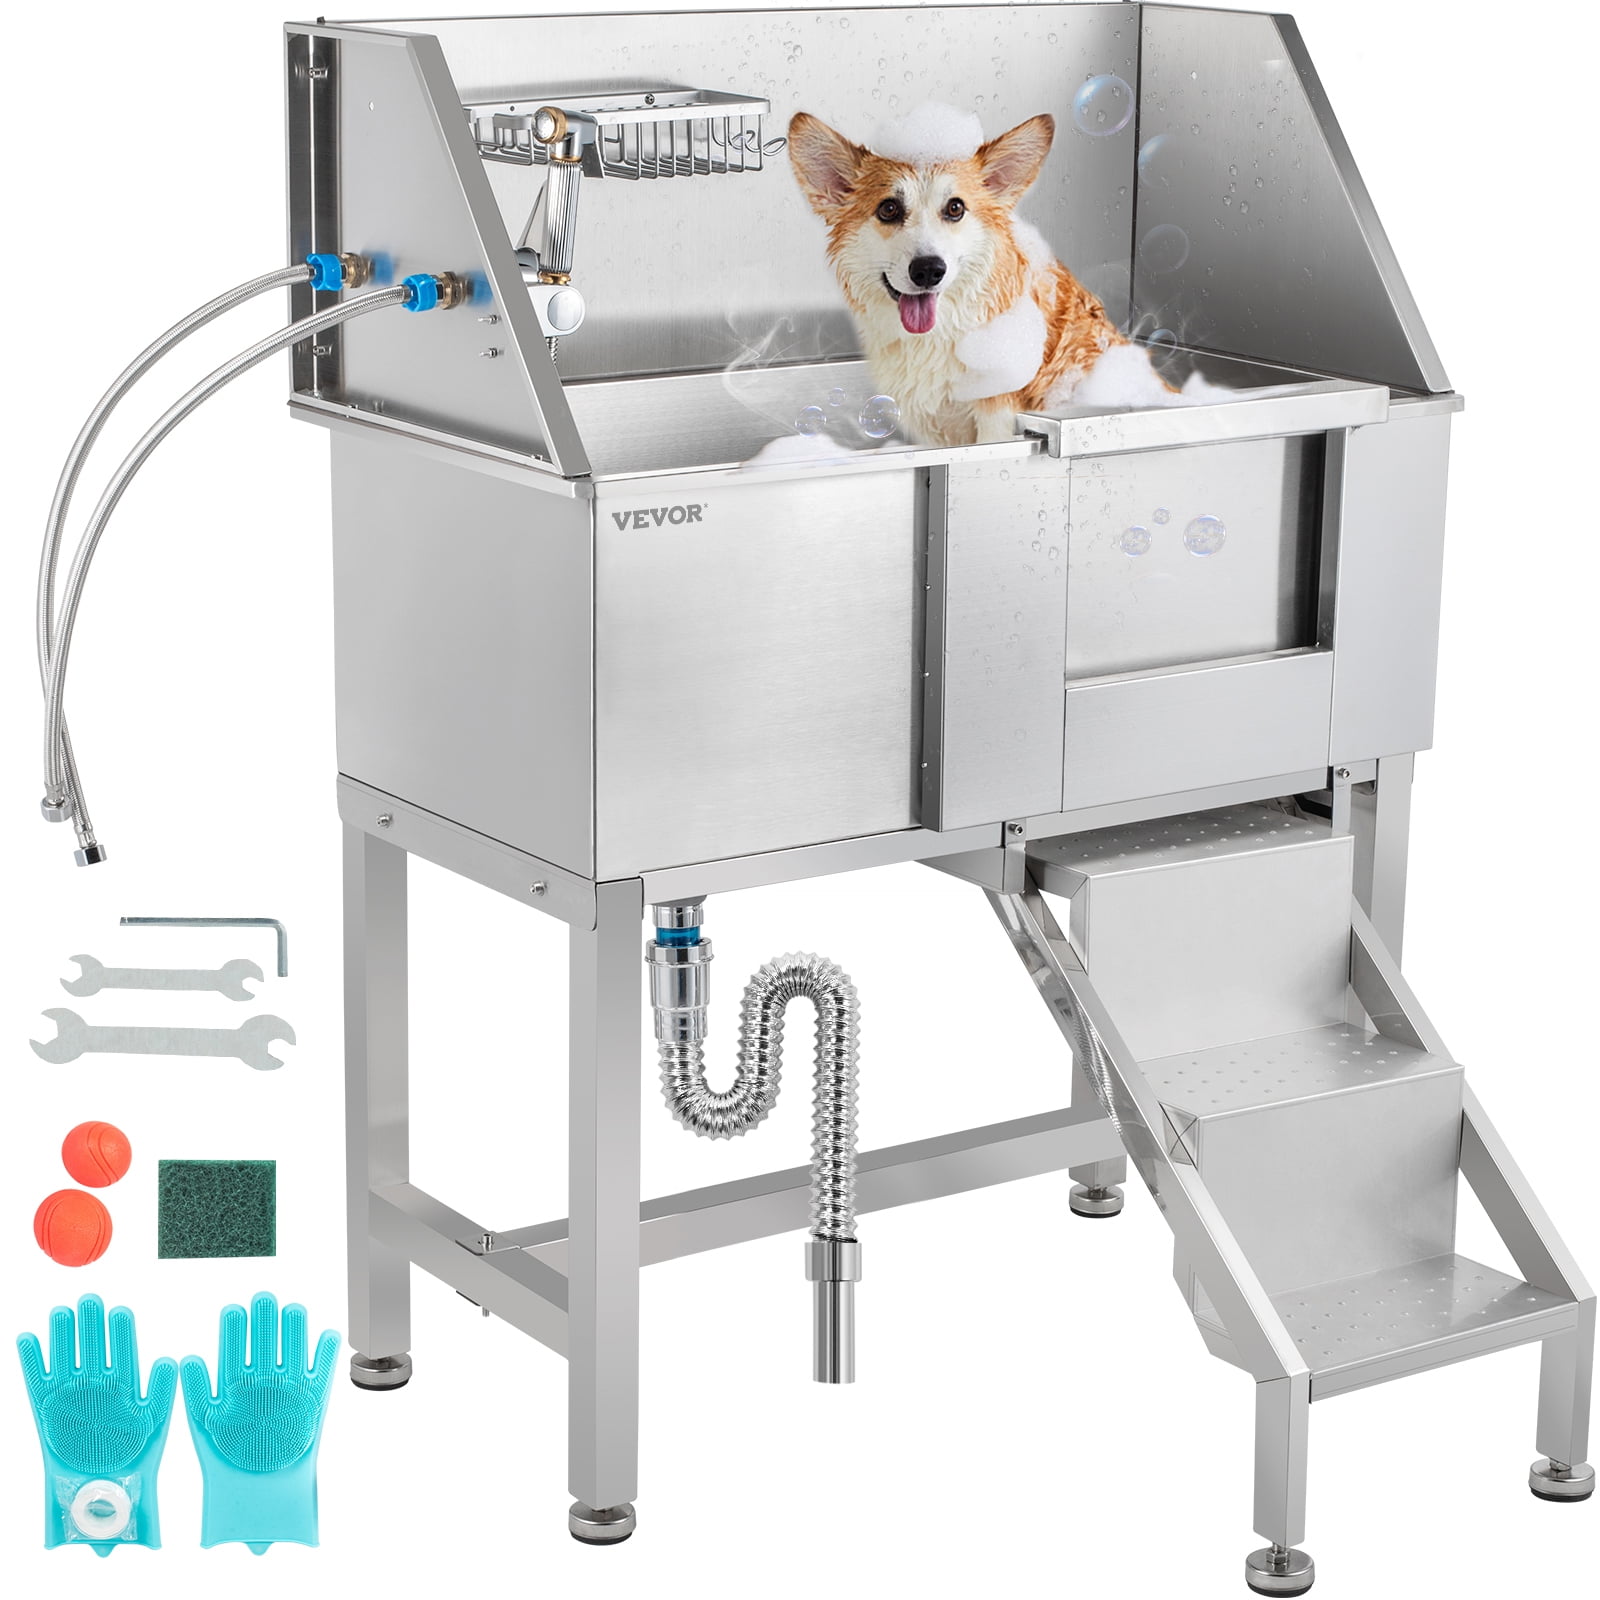 VEVOR Pet Grooming Tub, Stainless Steel Dog Wash Station 200LBS Load Stainless Steel Dog Grooming Tubs